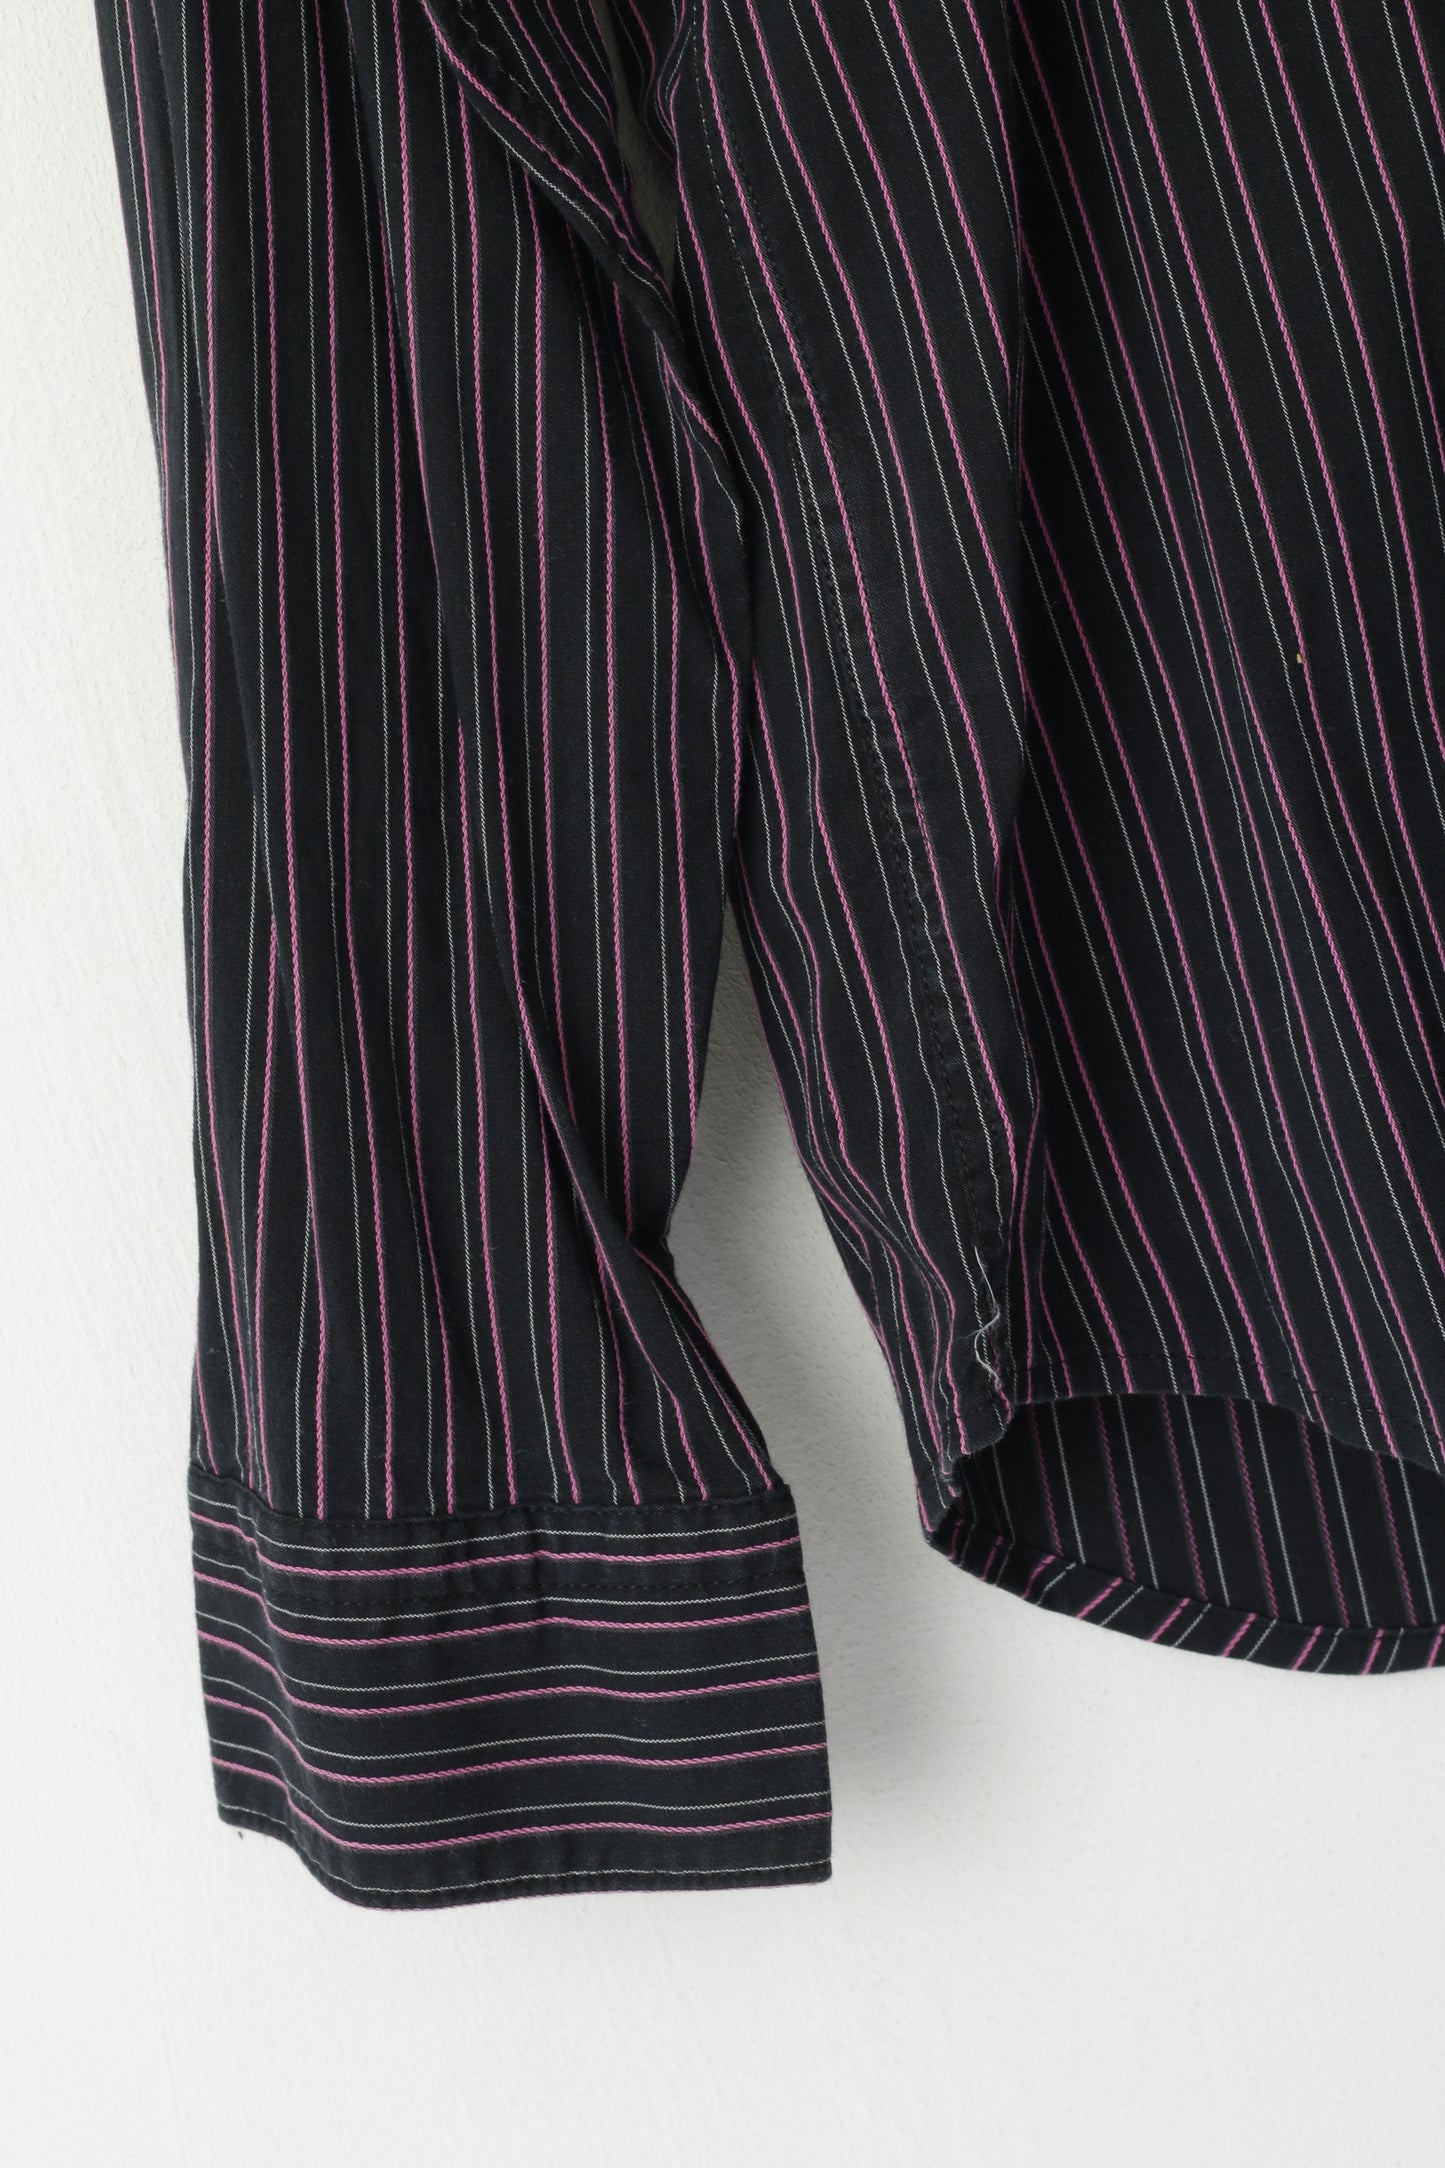 Hugo Boss Men M Casual Shirt Black Pink Striped Cotton Stretch Fit Long Sleeve Top